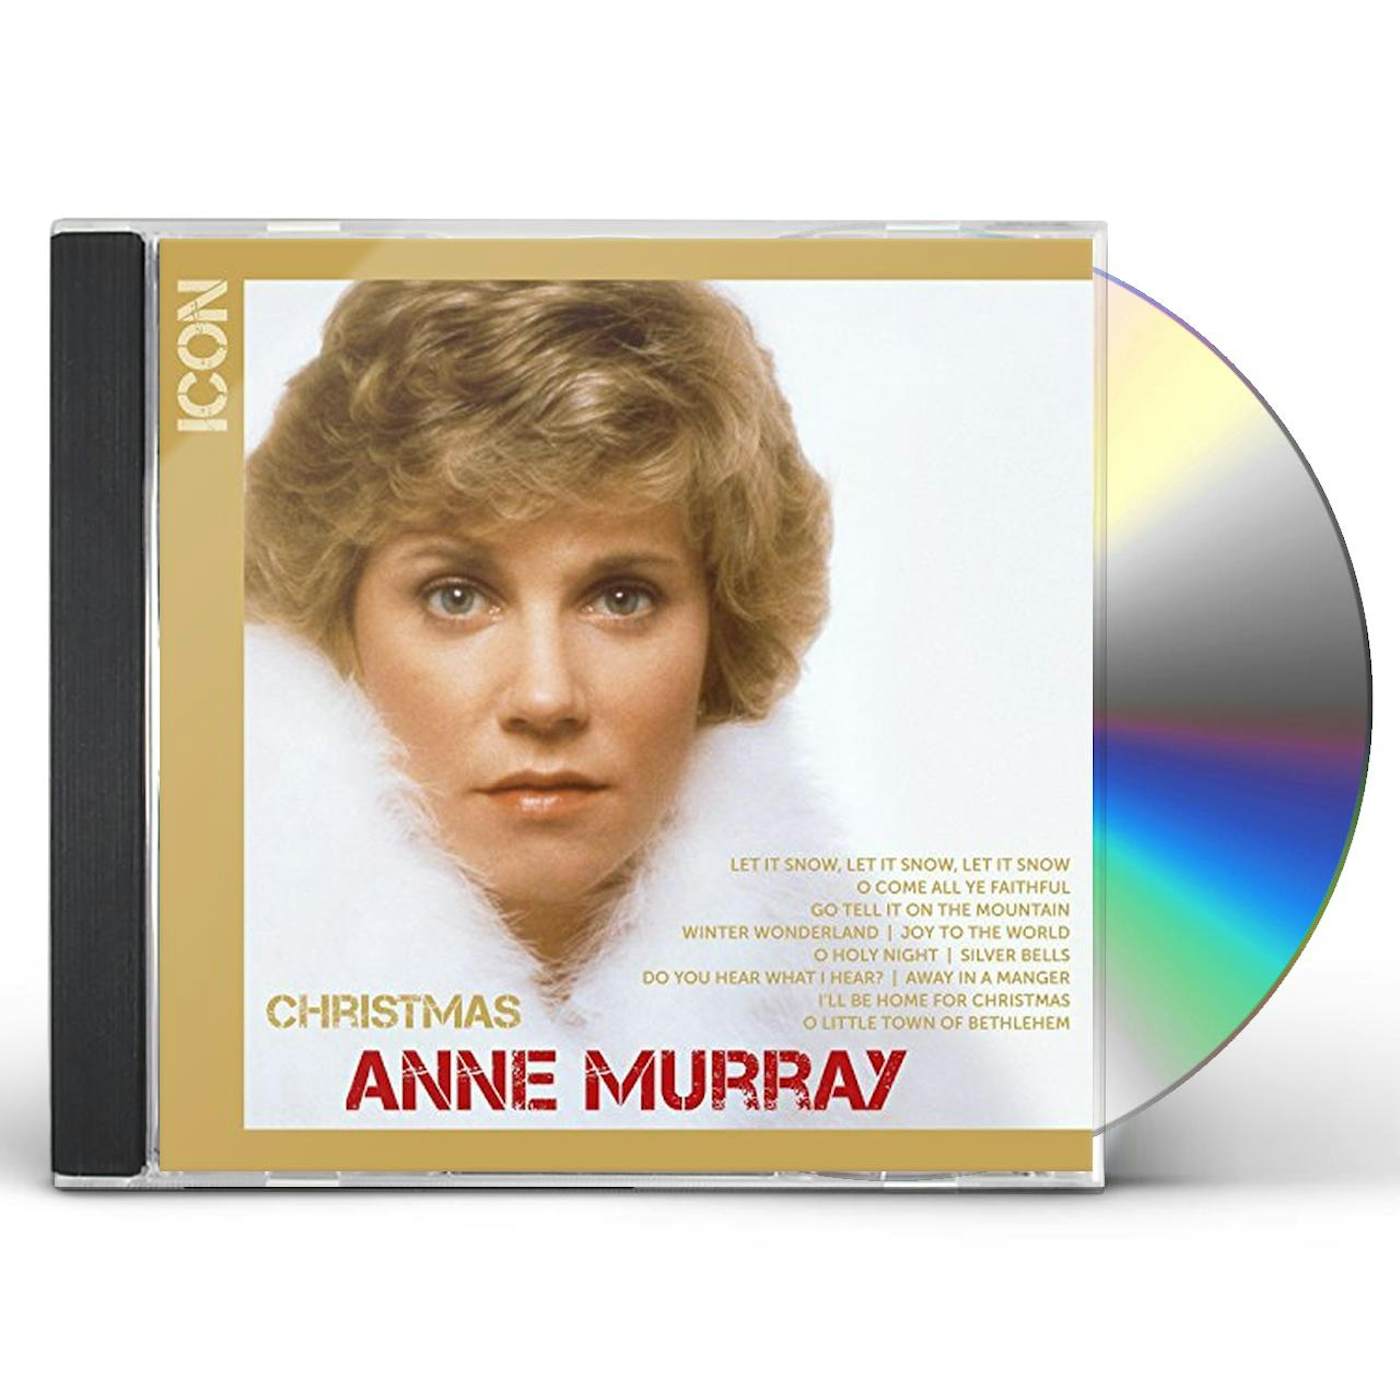 Anne Murray ICON - CHRISTMAS CD